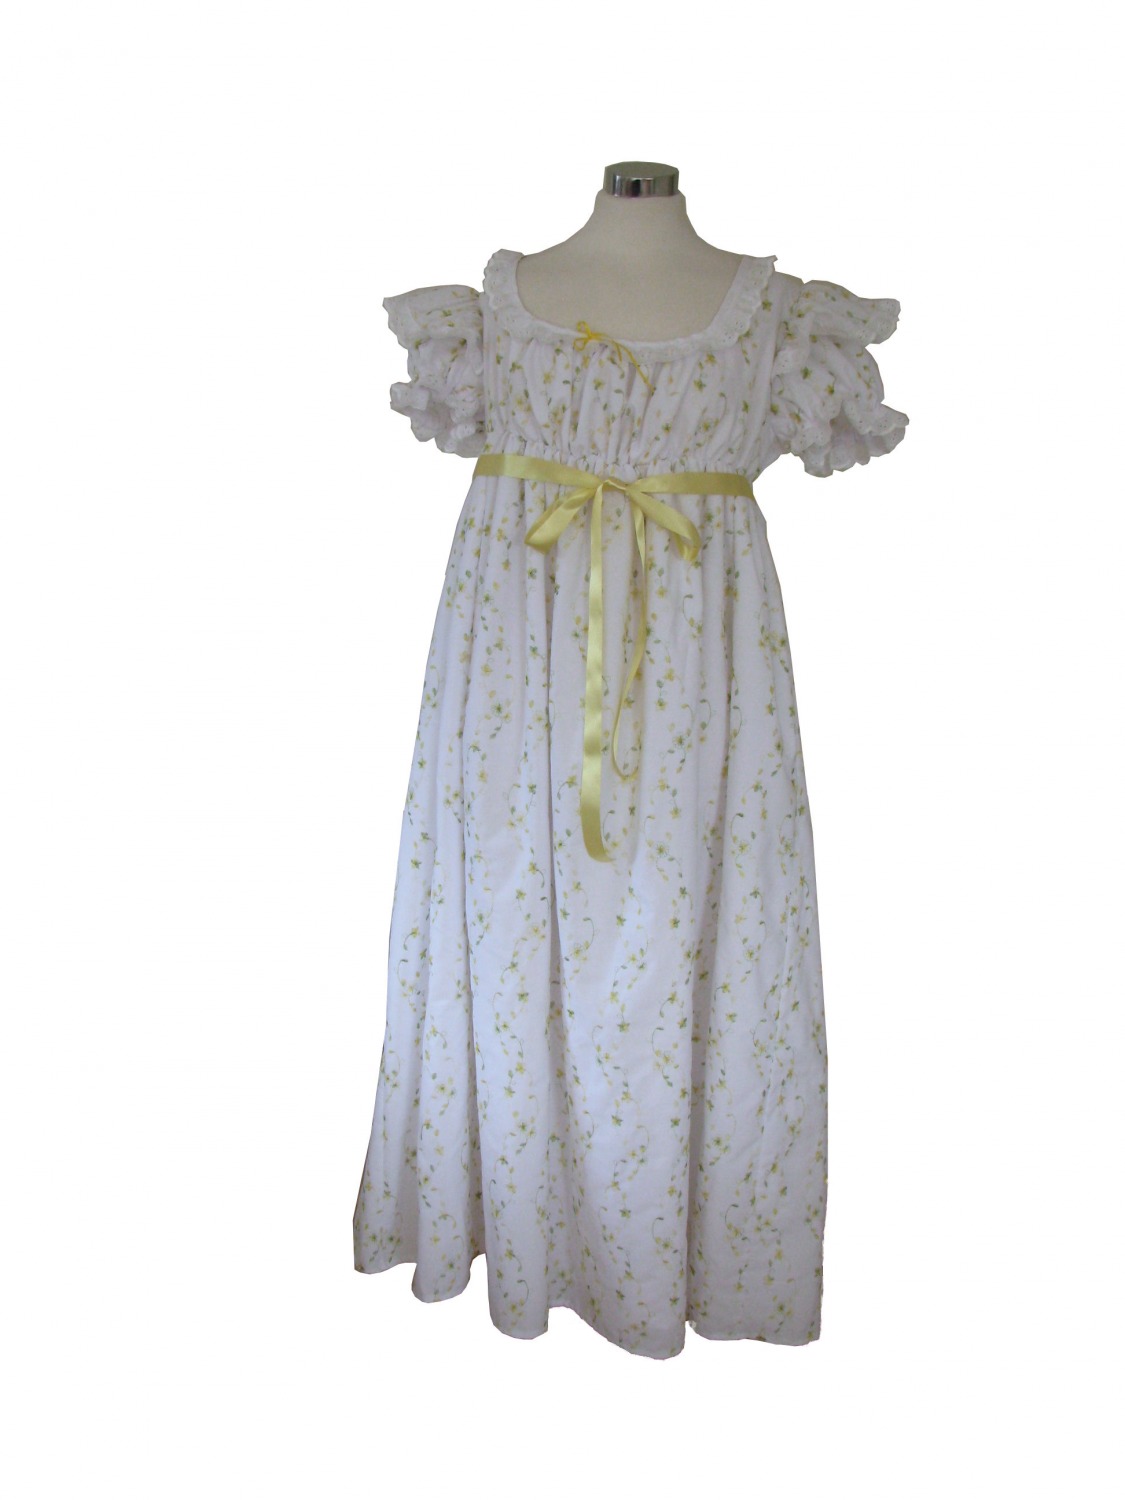 Ladies 19th Century Regency Jane Austen Costume Size 12 - 14 Image